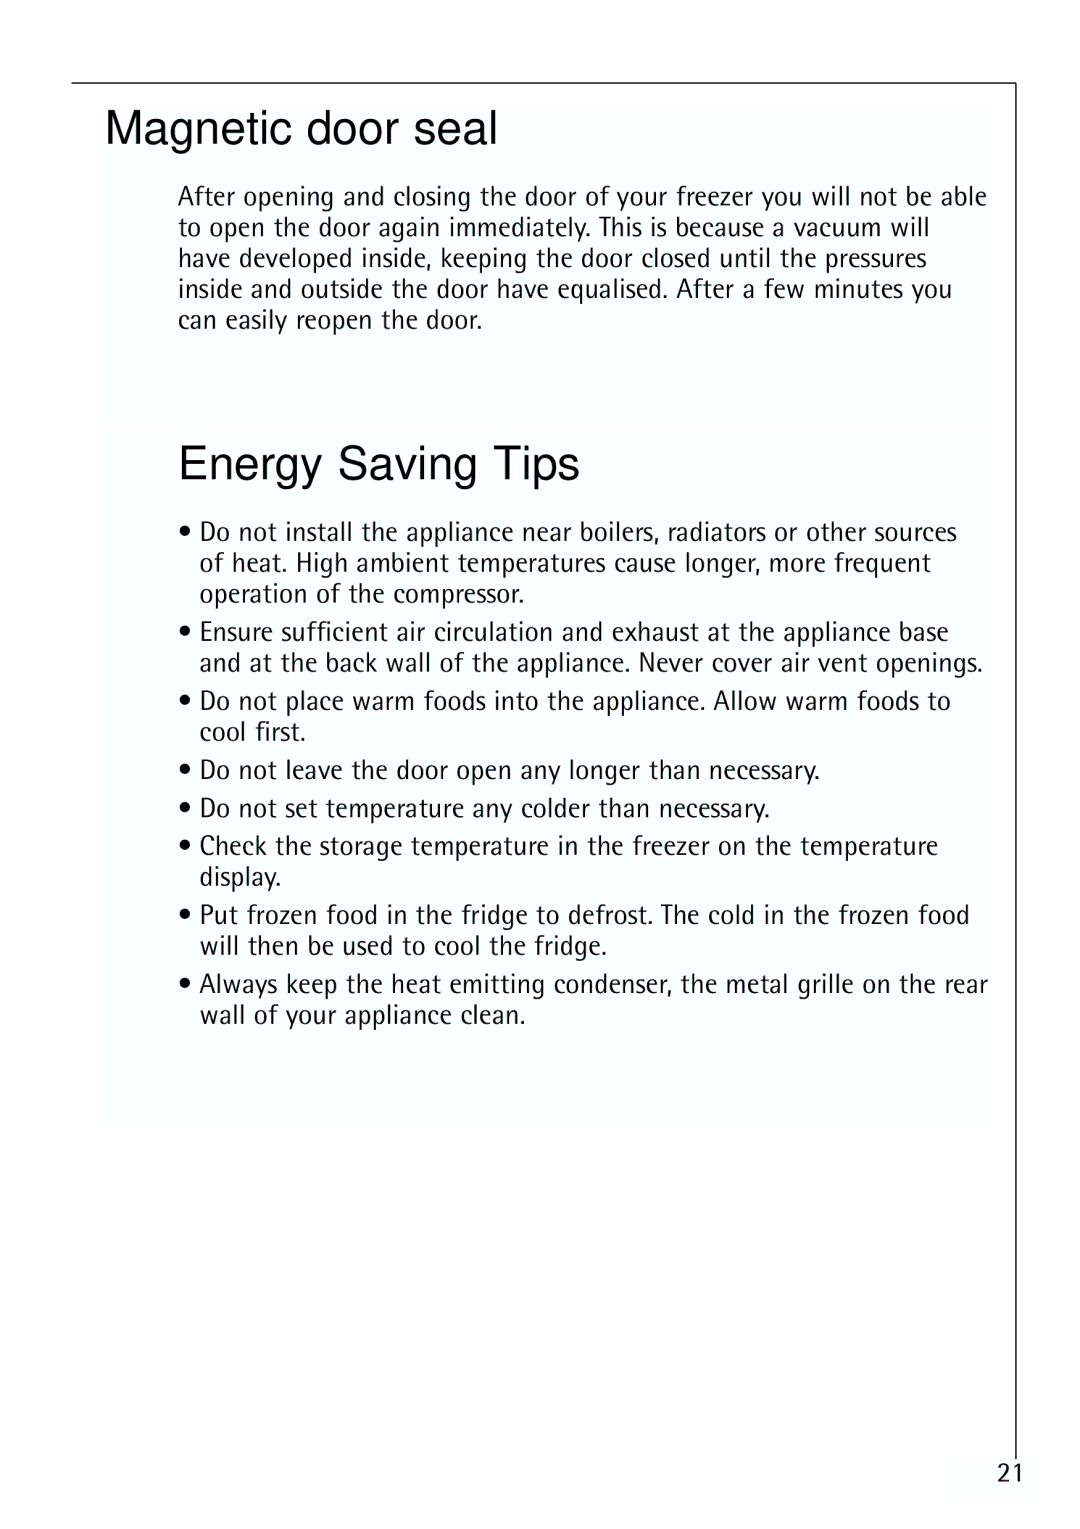 Electrolux ARCTIS 70110 manual Magnetic door seal, Energy Saving Tips 